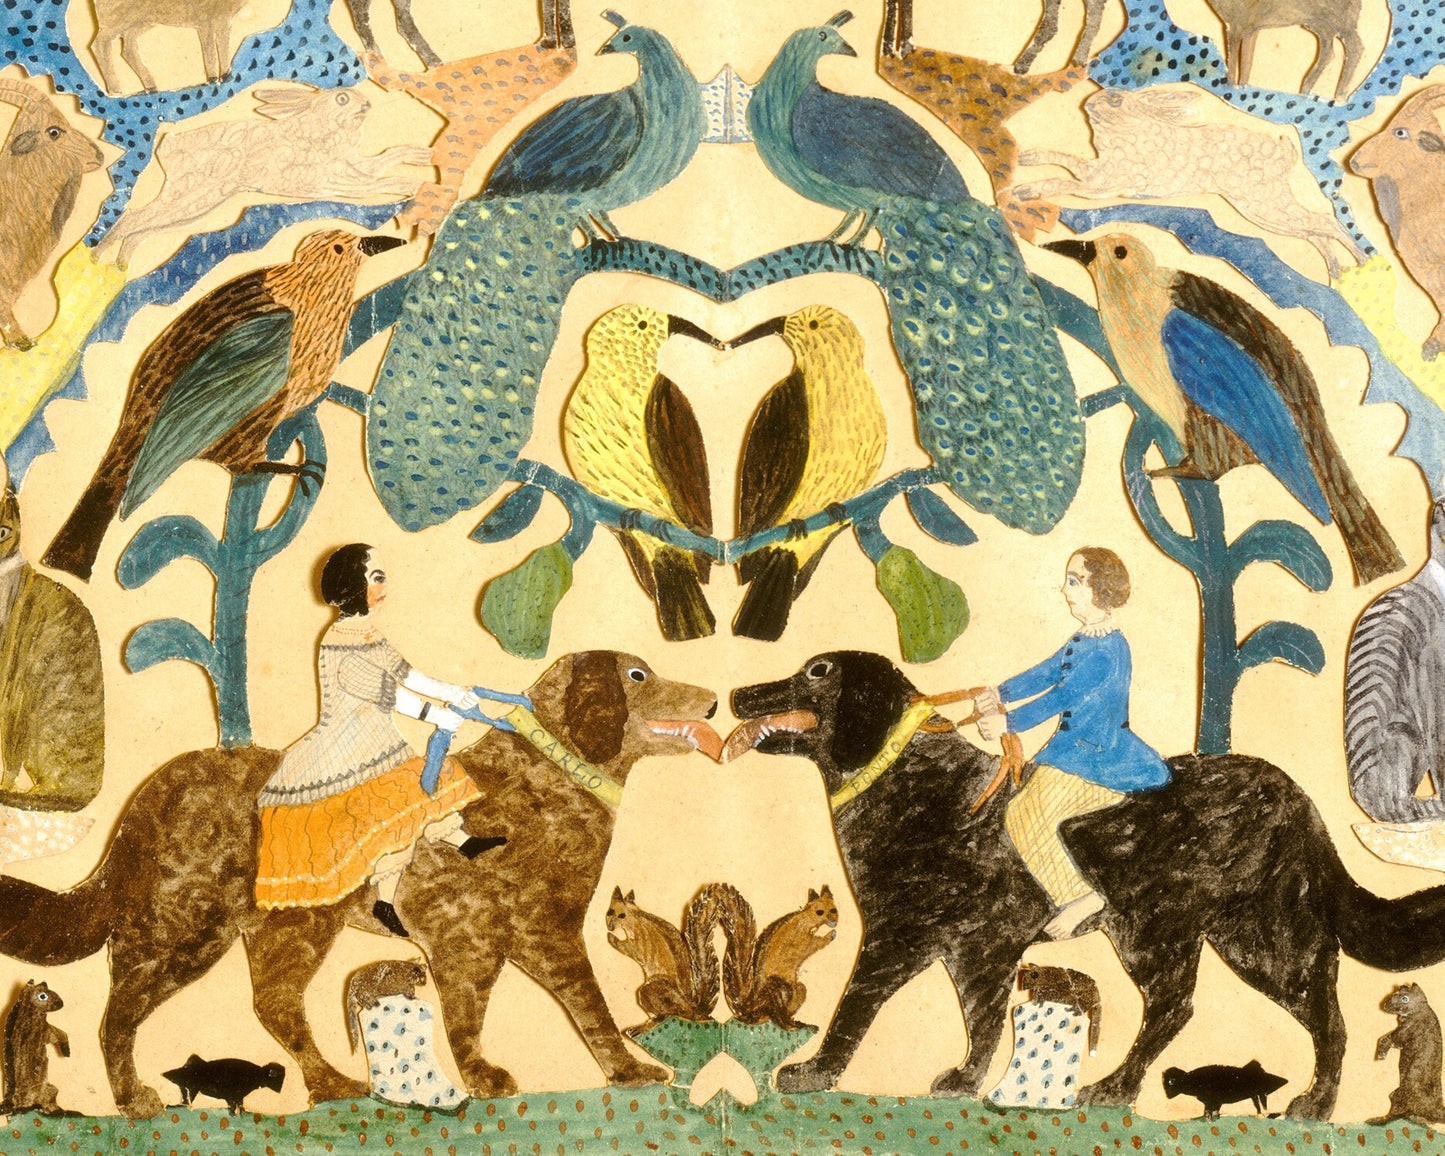 Vintage collage animal art | Americana folk art | Unusual animal art | Paper cut collage art | Naive, primitive art | 19th century animals